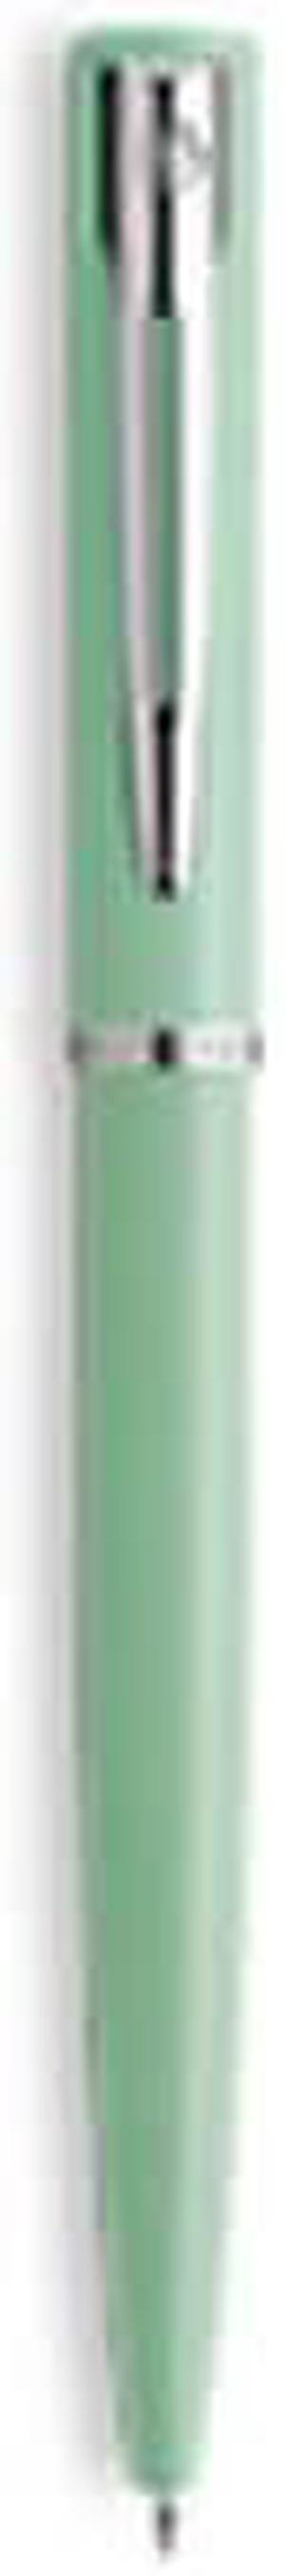 Waterman Allure Ballpoint Pen - Pastel Green